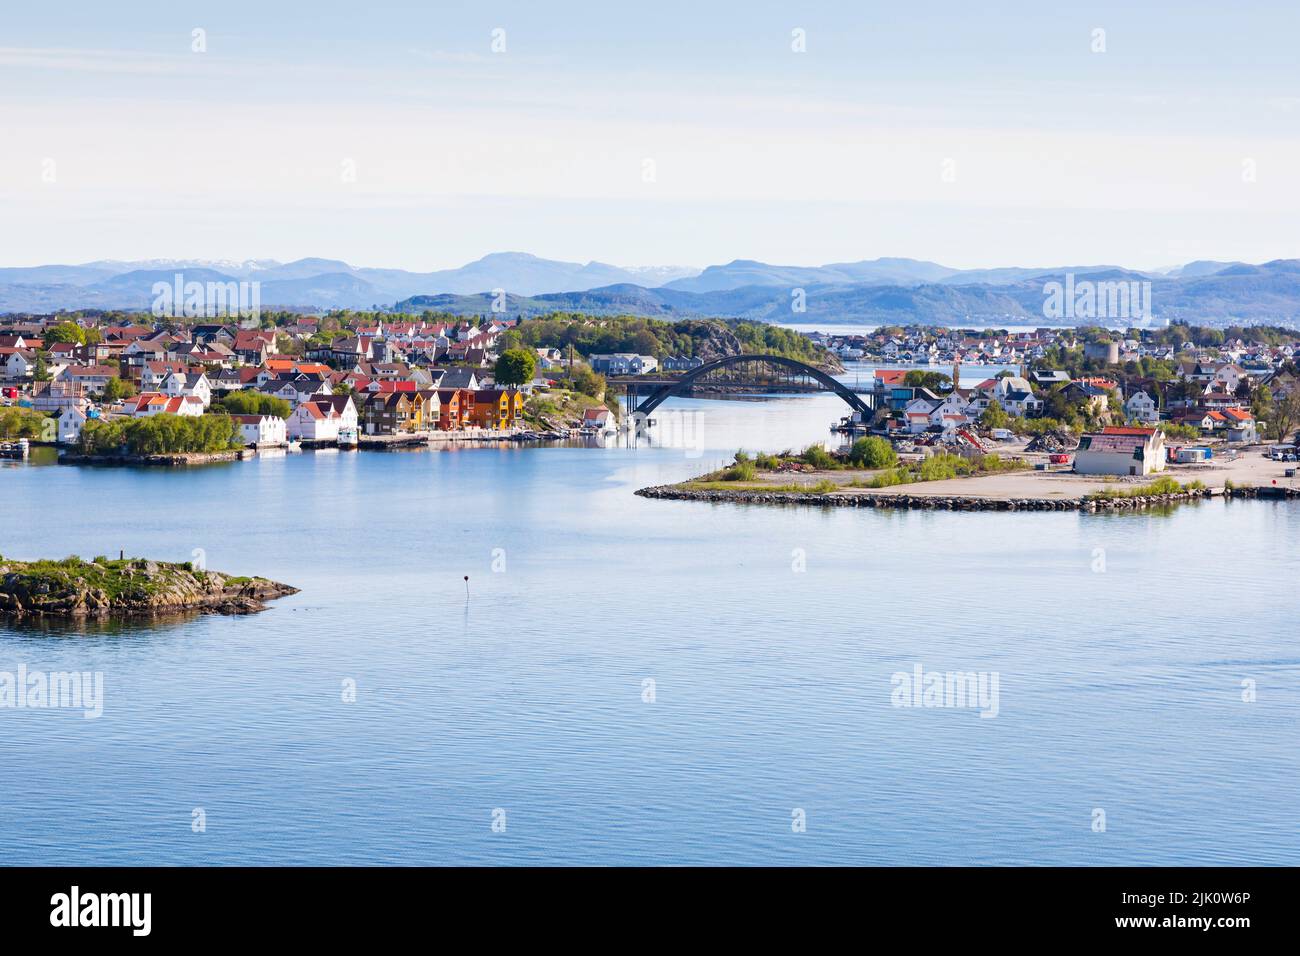 The Pyntesundbrua road traffic bridge between the islands of Engoy and Buoy, Stavanger harbour. Norway Stock Photo